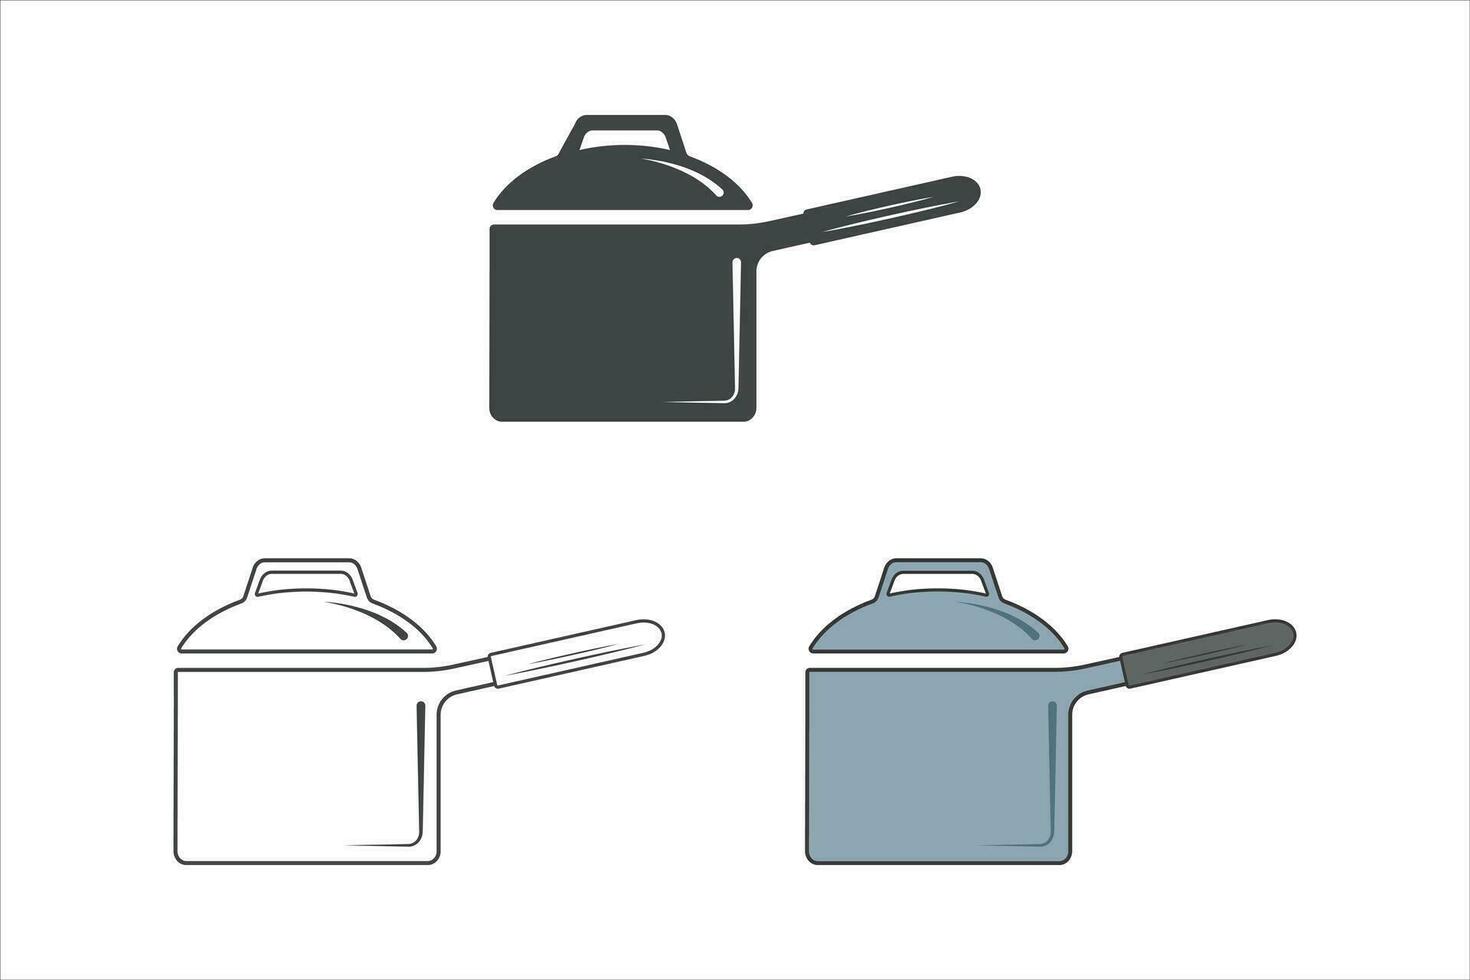 Cooking Pot, Cooking Pot Silhouette, Restaurant Equipment, Cooking Equipment, Clip Art, Utensil SVG, Silhouette, Cooking Pot Vector, illustration vector